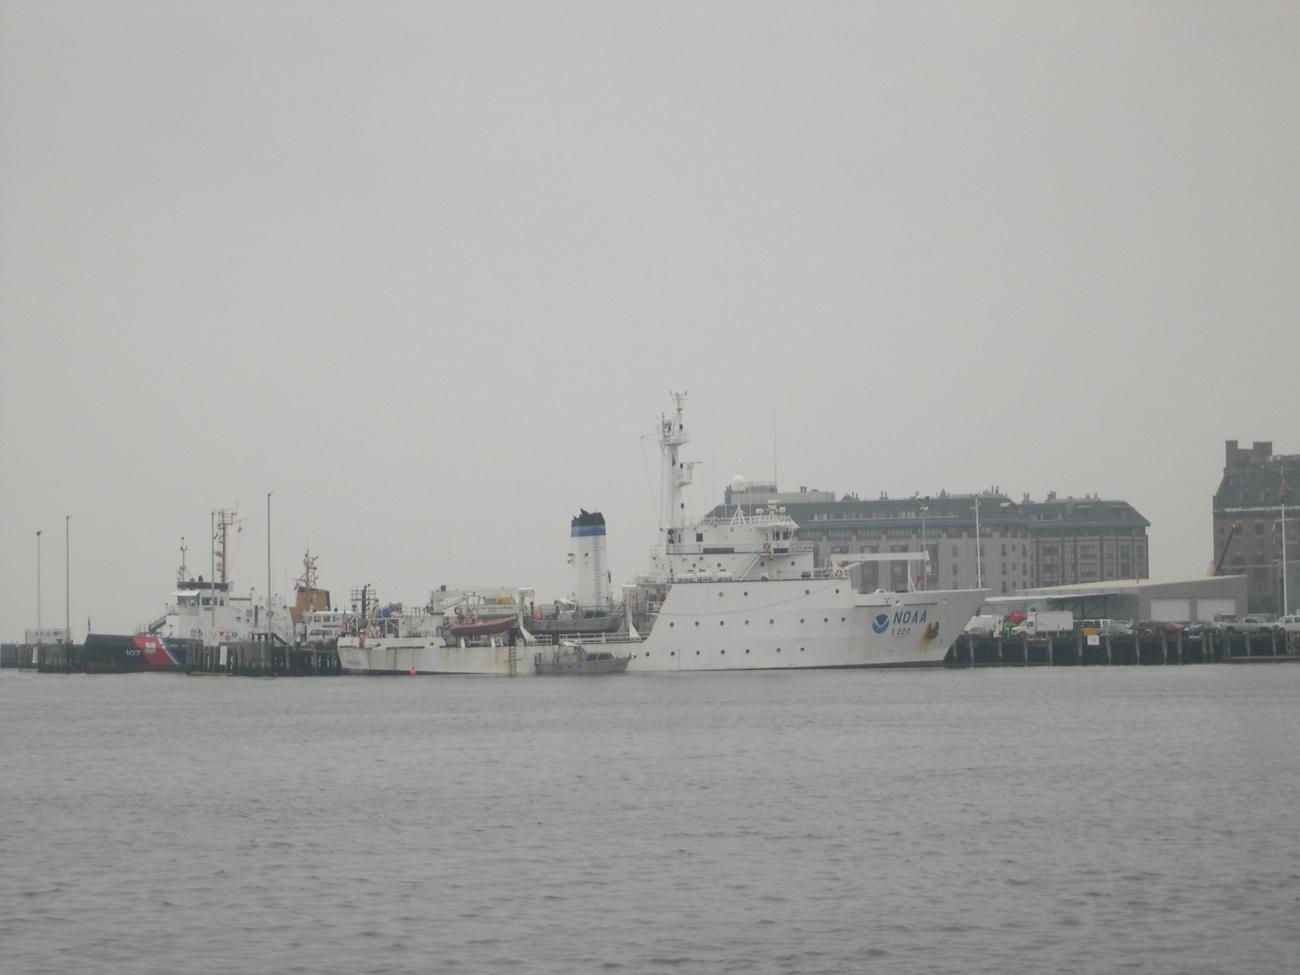 NOAA Ship THOMAS JEFFERSON tied up at the Coast Guard piers